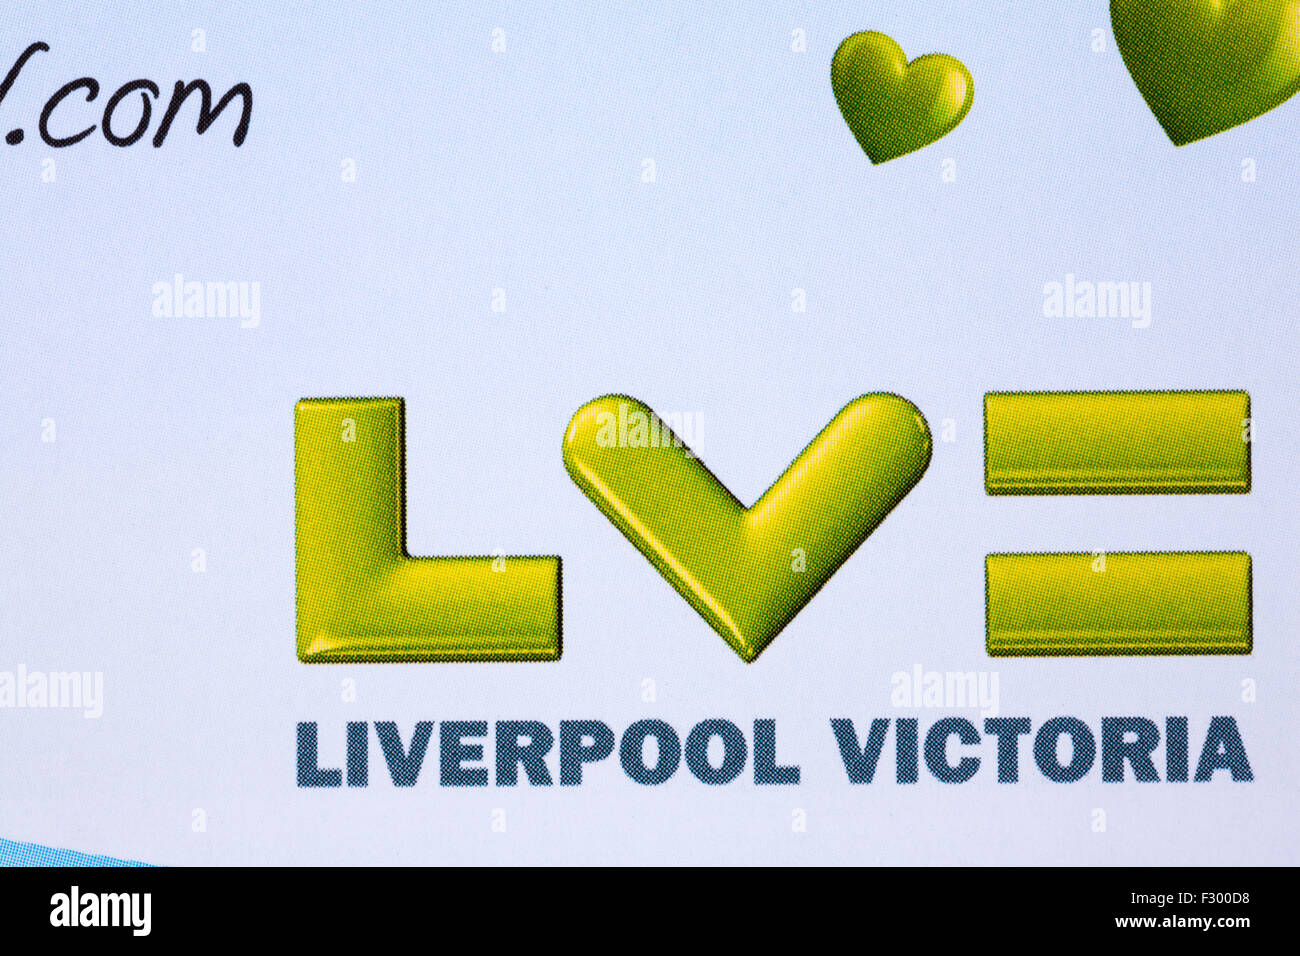 LV Liverpool Victoria logo on correspondence received Stock Photo